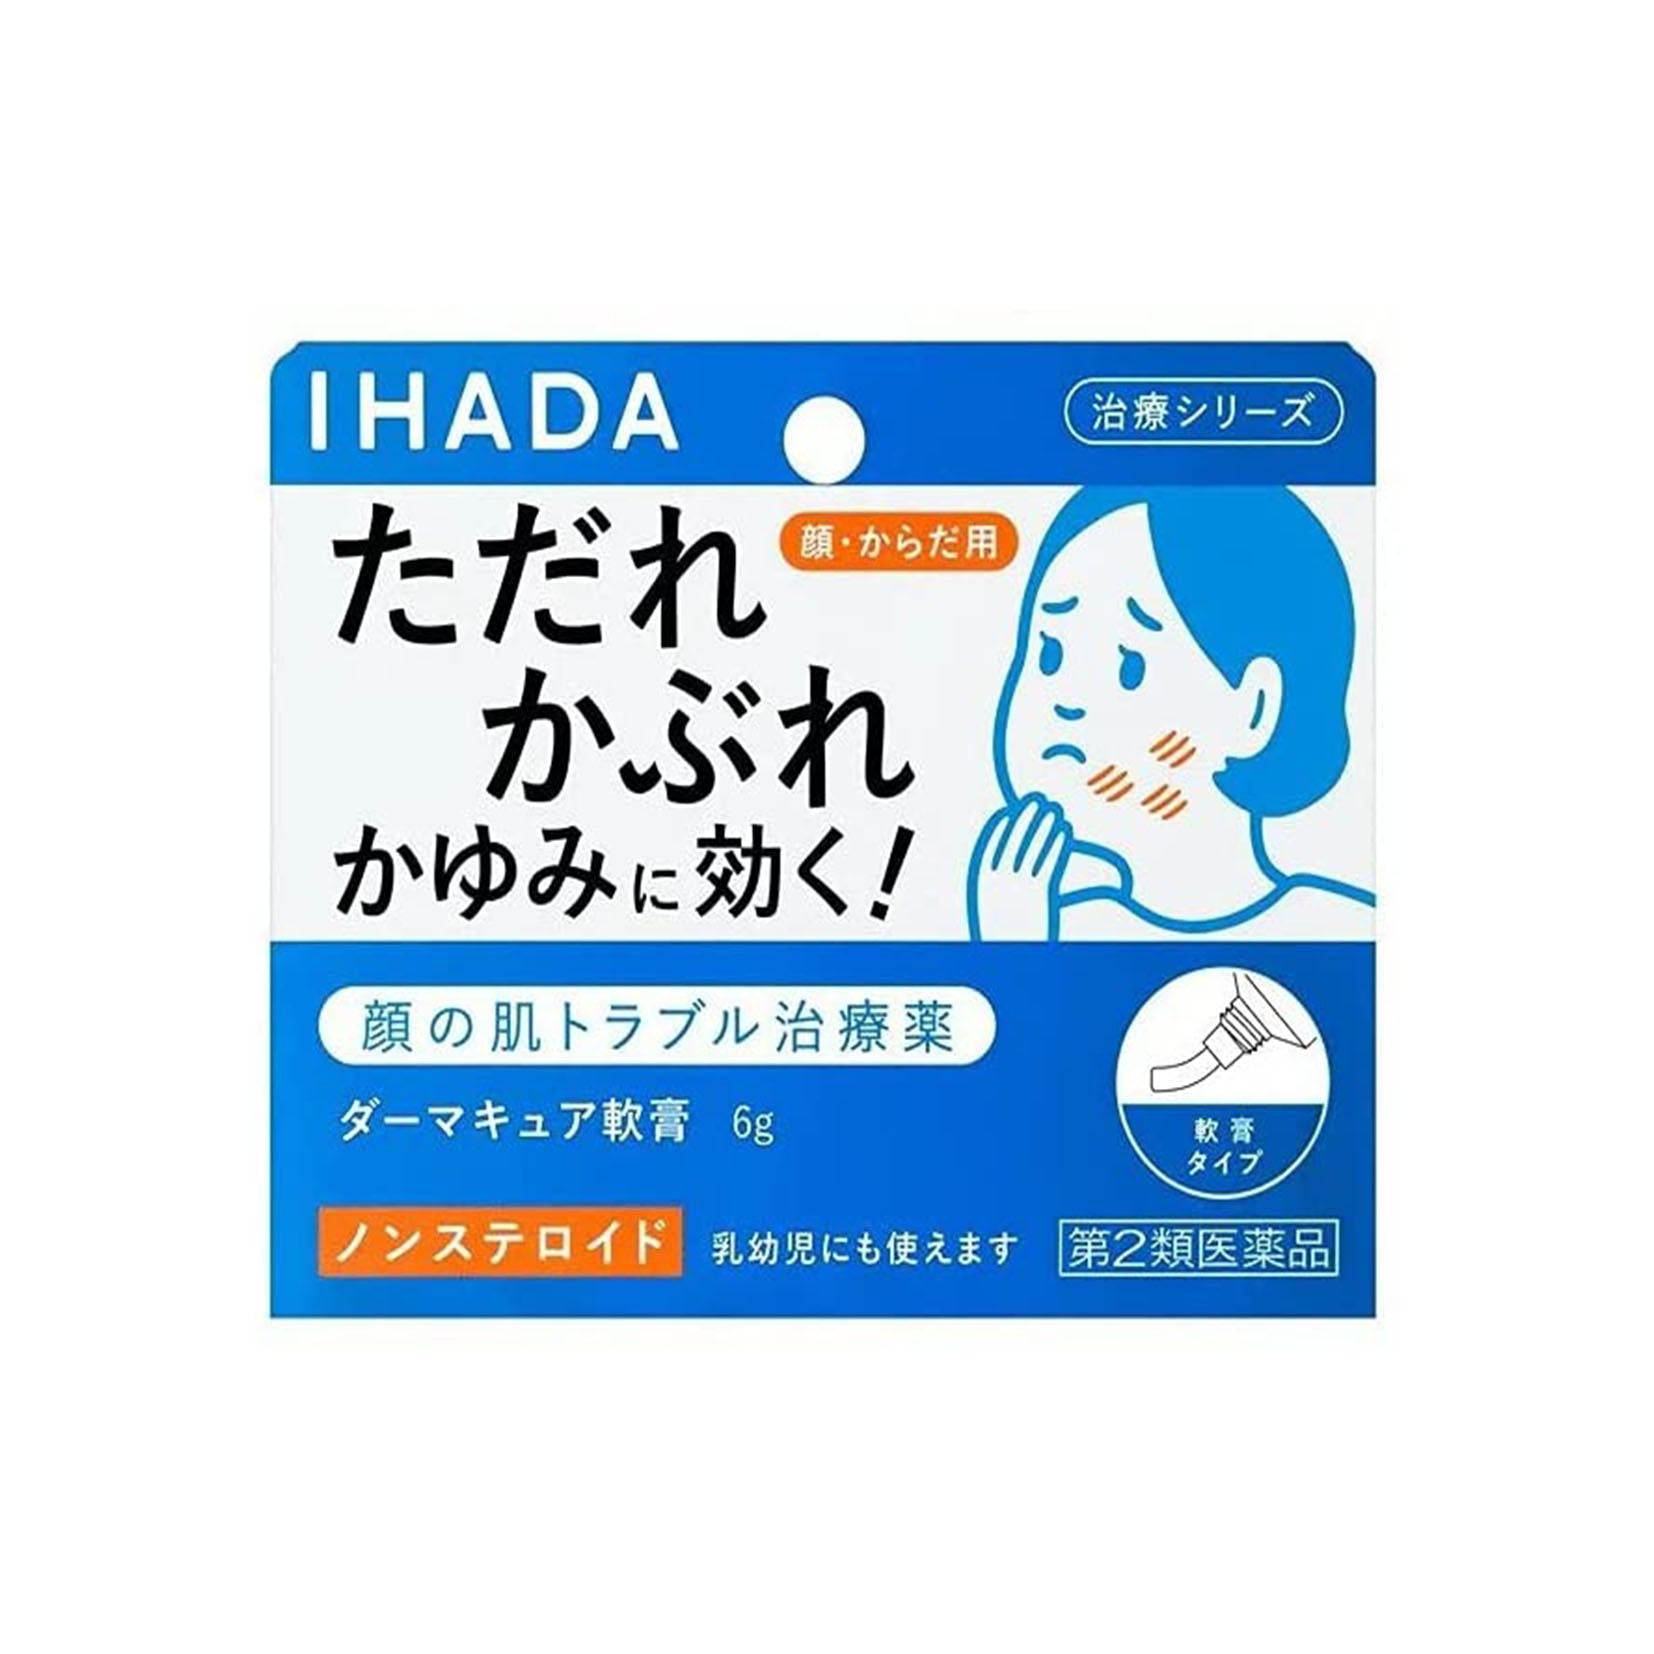 Shiseido IHADA Medicinal Derma Cure Ointment 6g - Harajuku Culture Japan - Japanease Products Store Beauty and Stationery